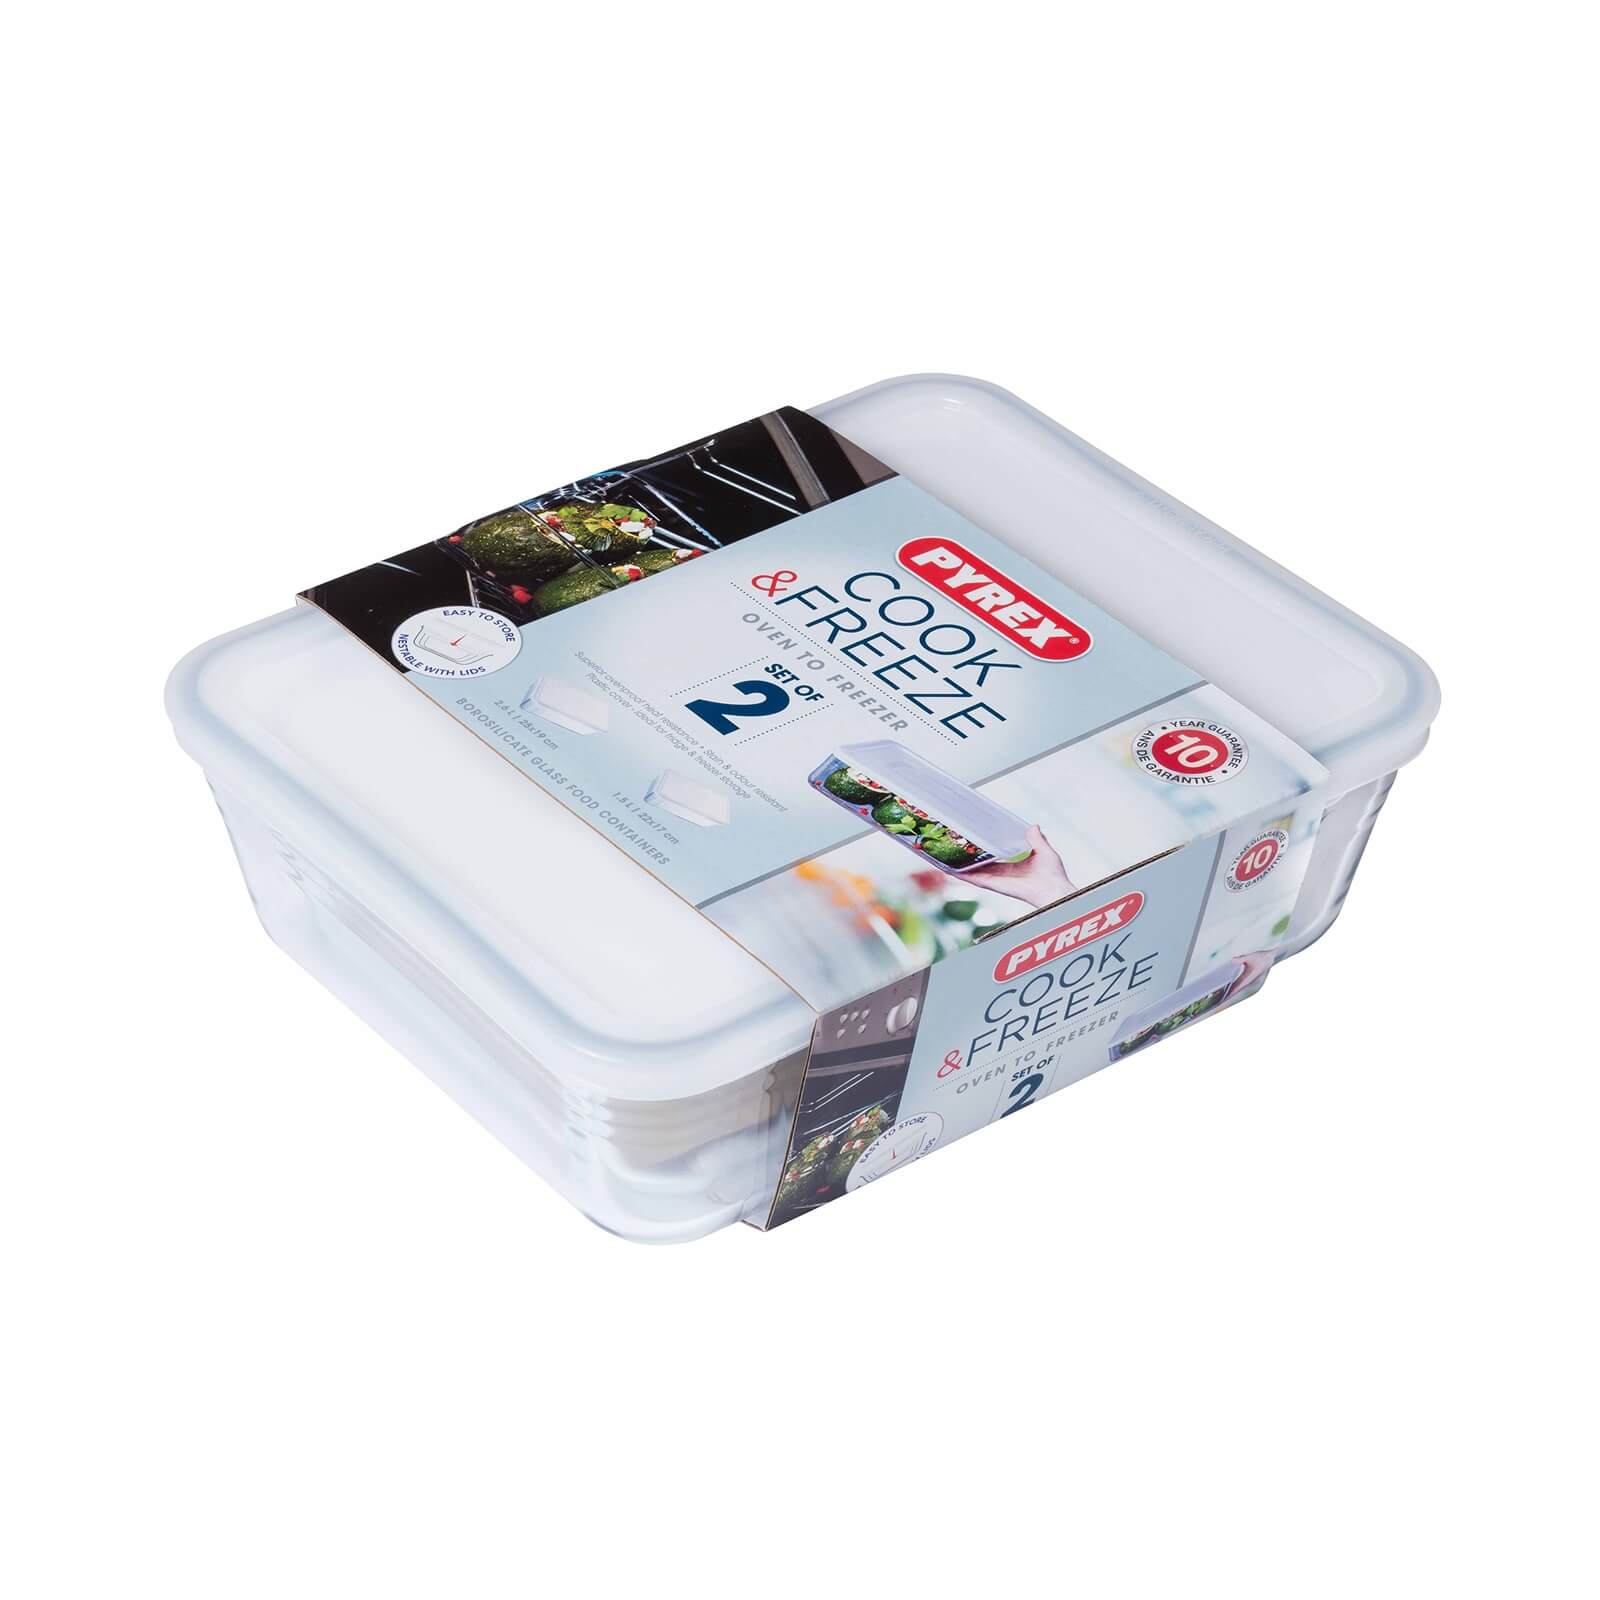 Pyrex Cook & Freeze Rectangular 2 Piece Food Storage Set - White